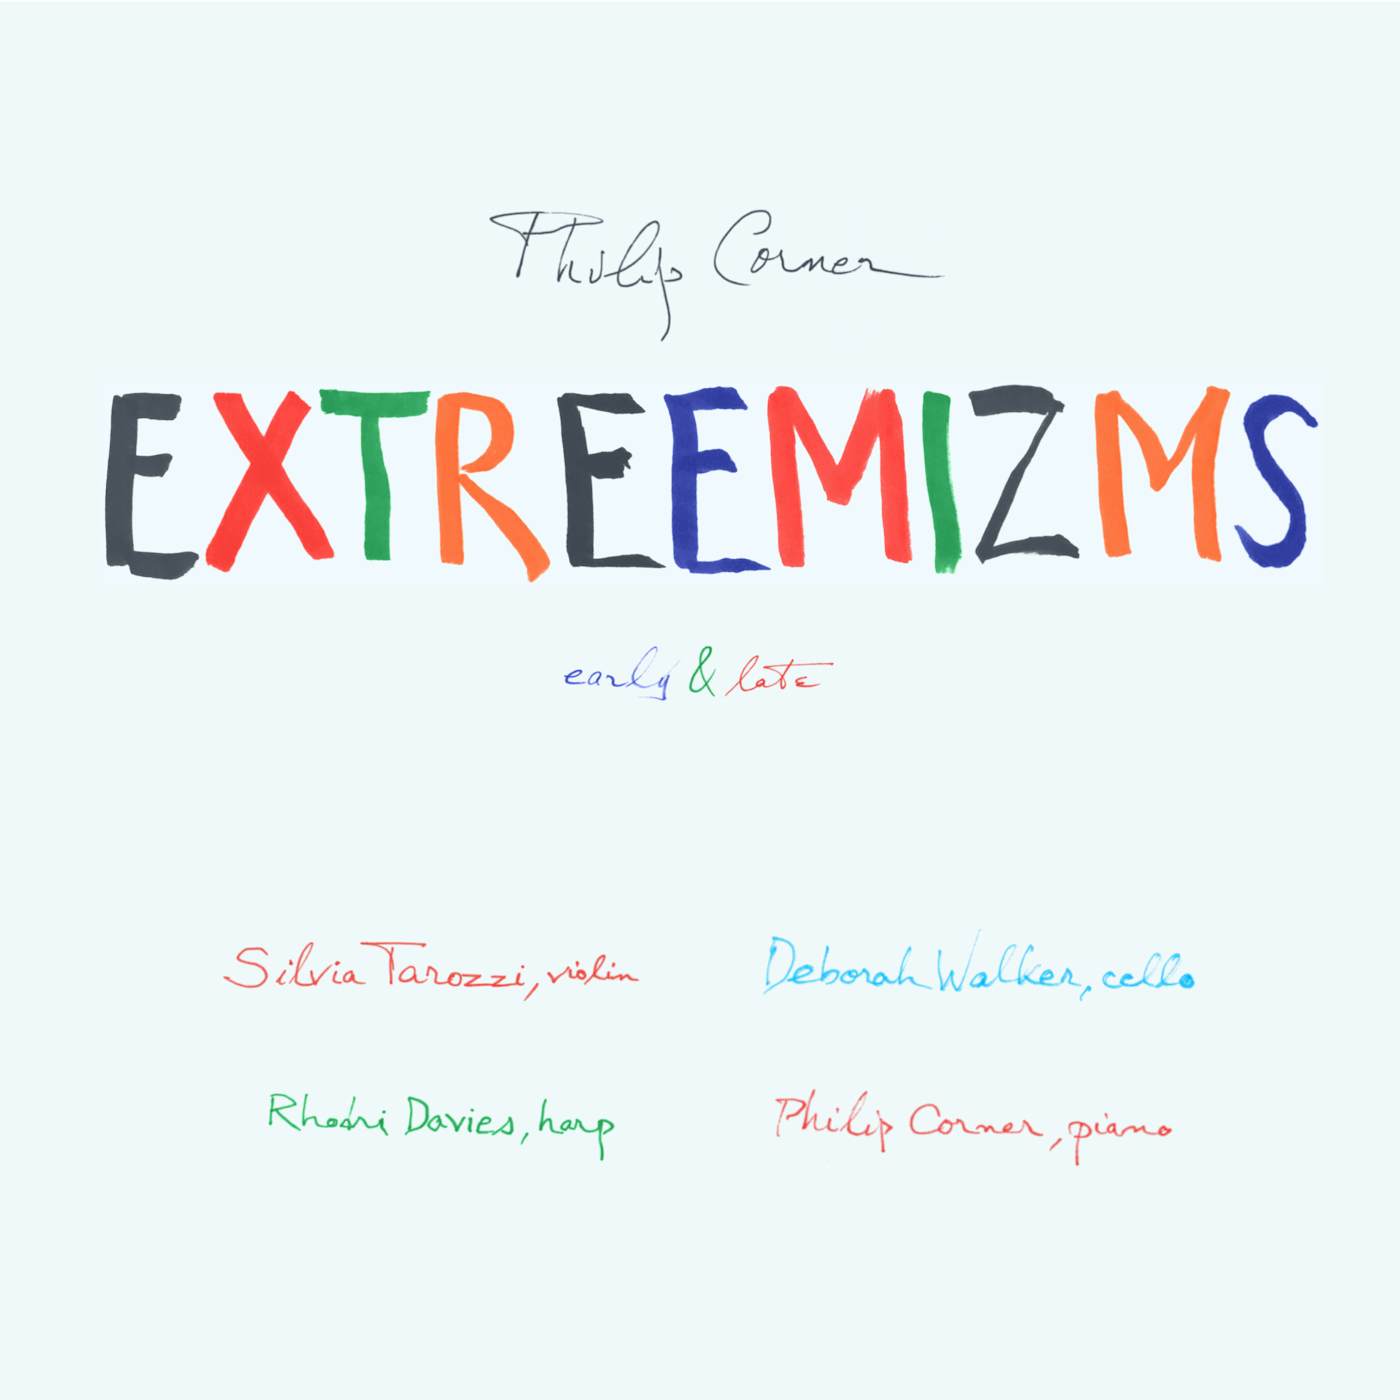 Philip Corner EXTREEMIZMS EARLY & LATE CD